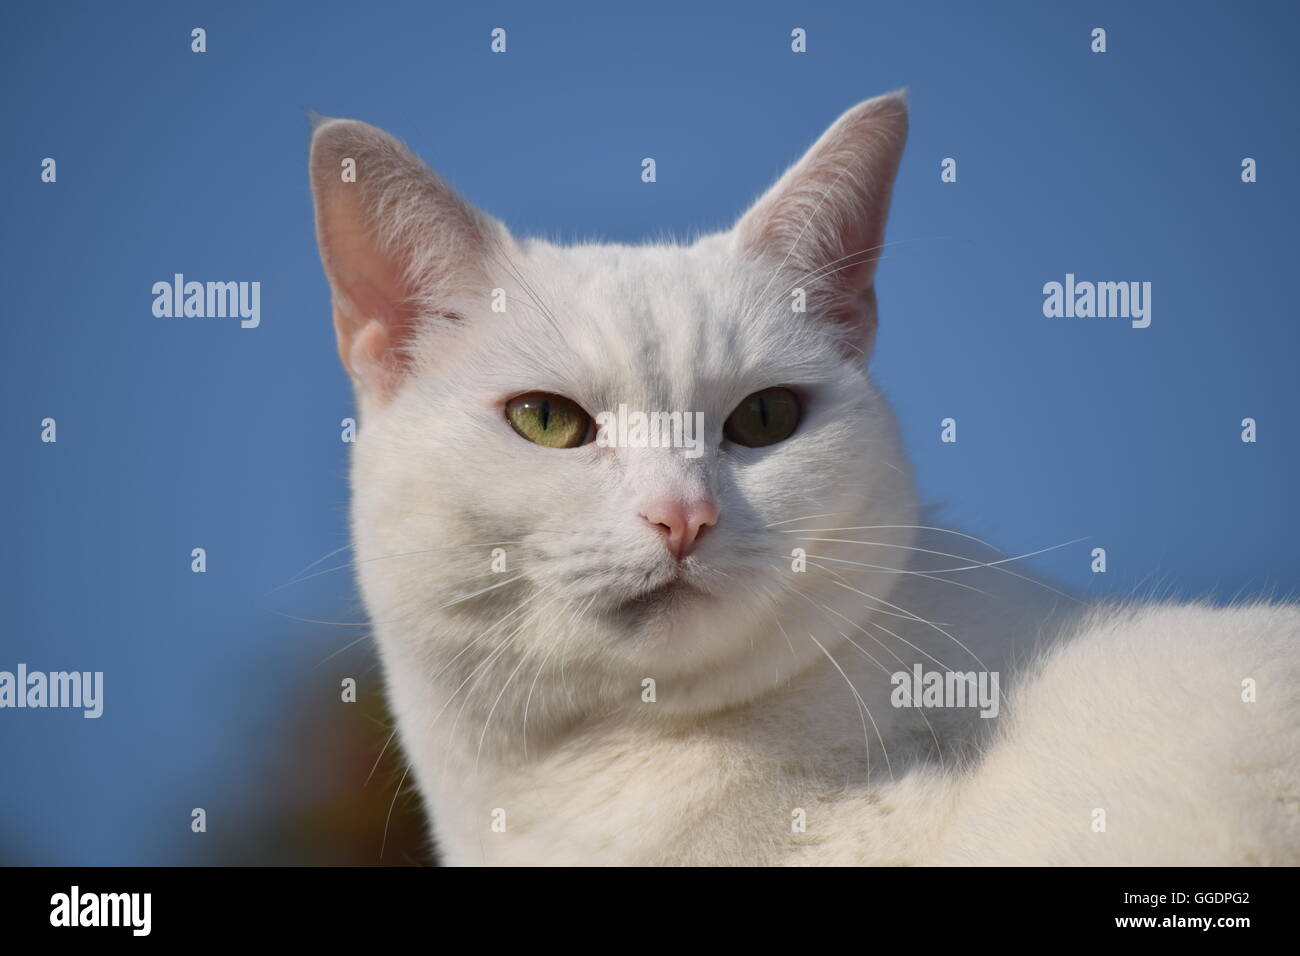 White cat against blue sky Stock Photo